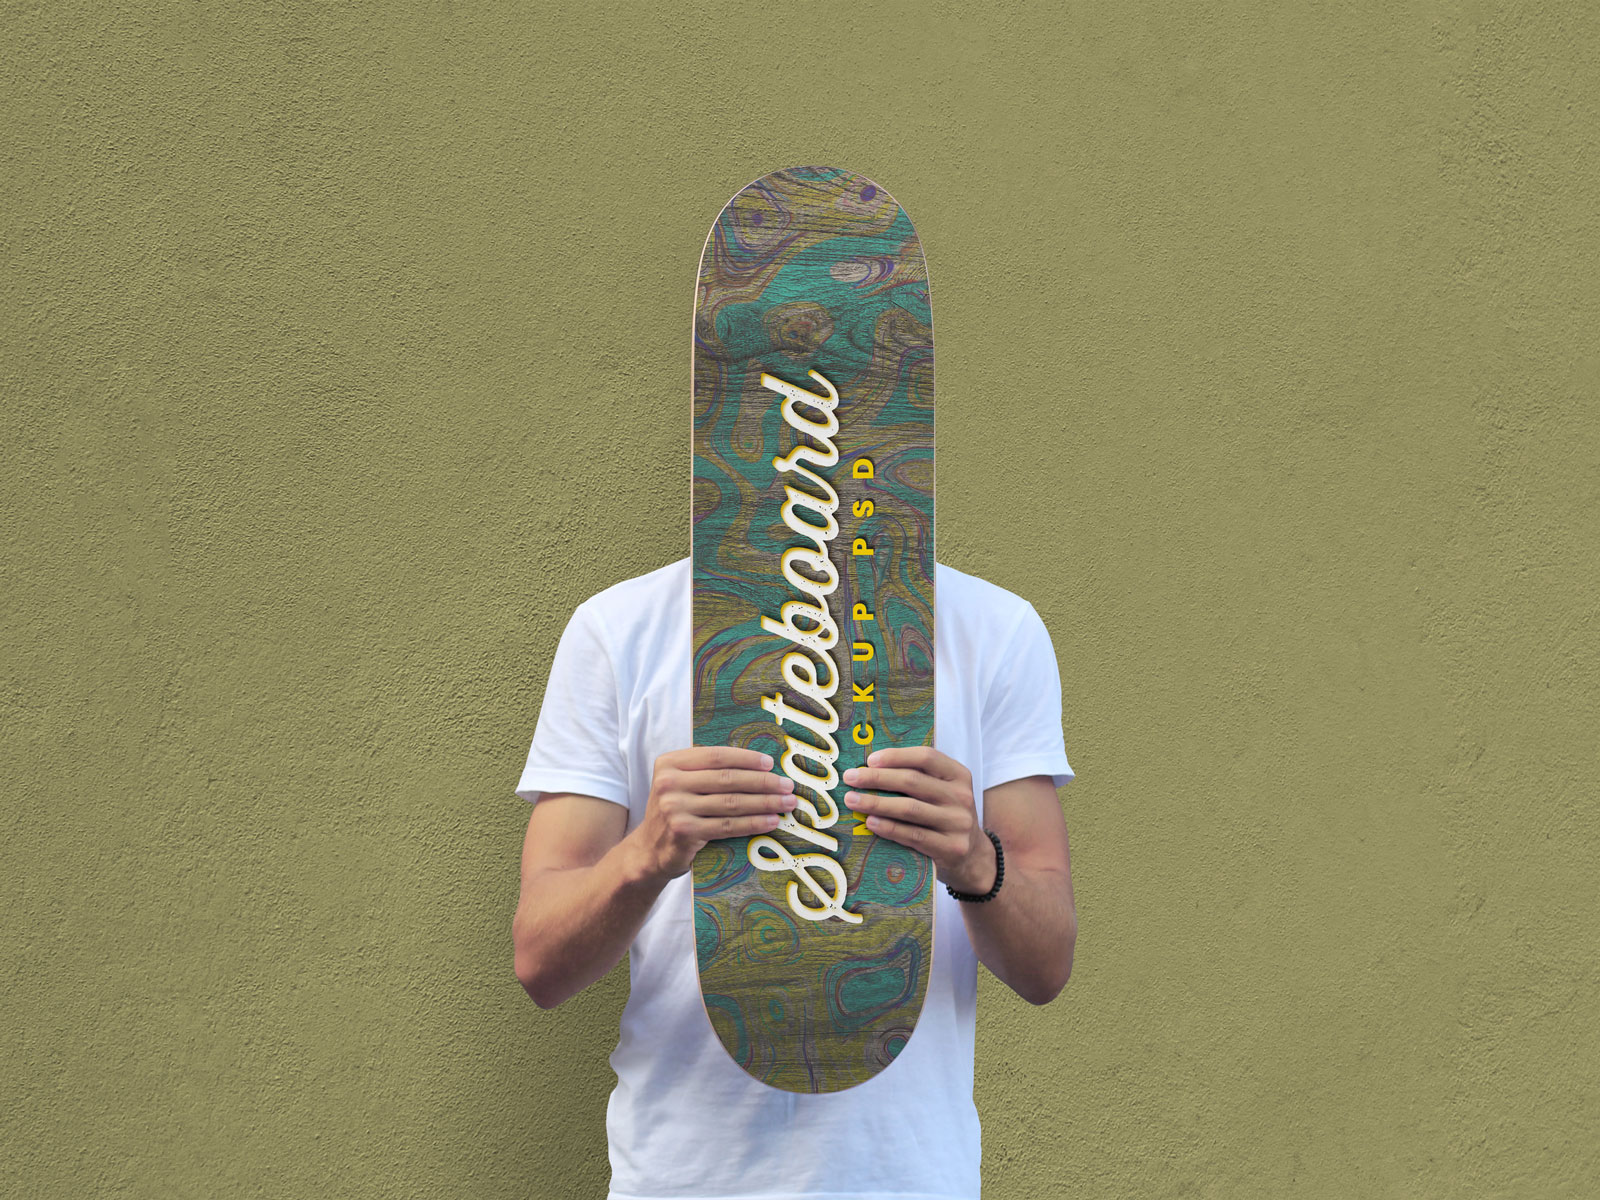 Free-Man-Holding-Skateboard-Mockup-PSD